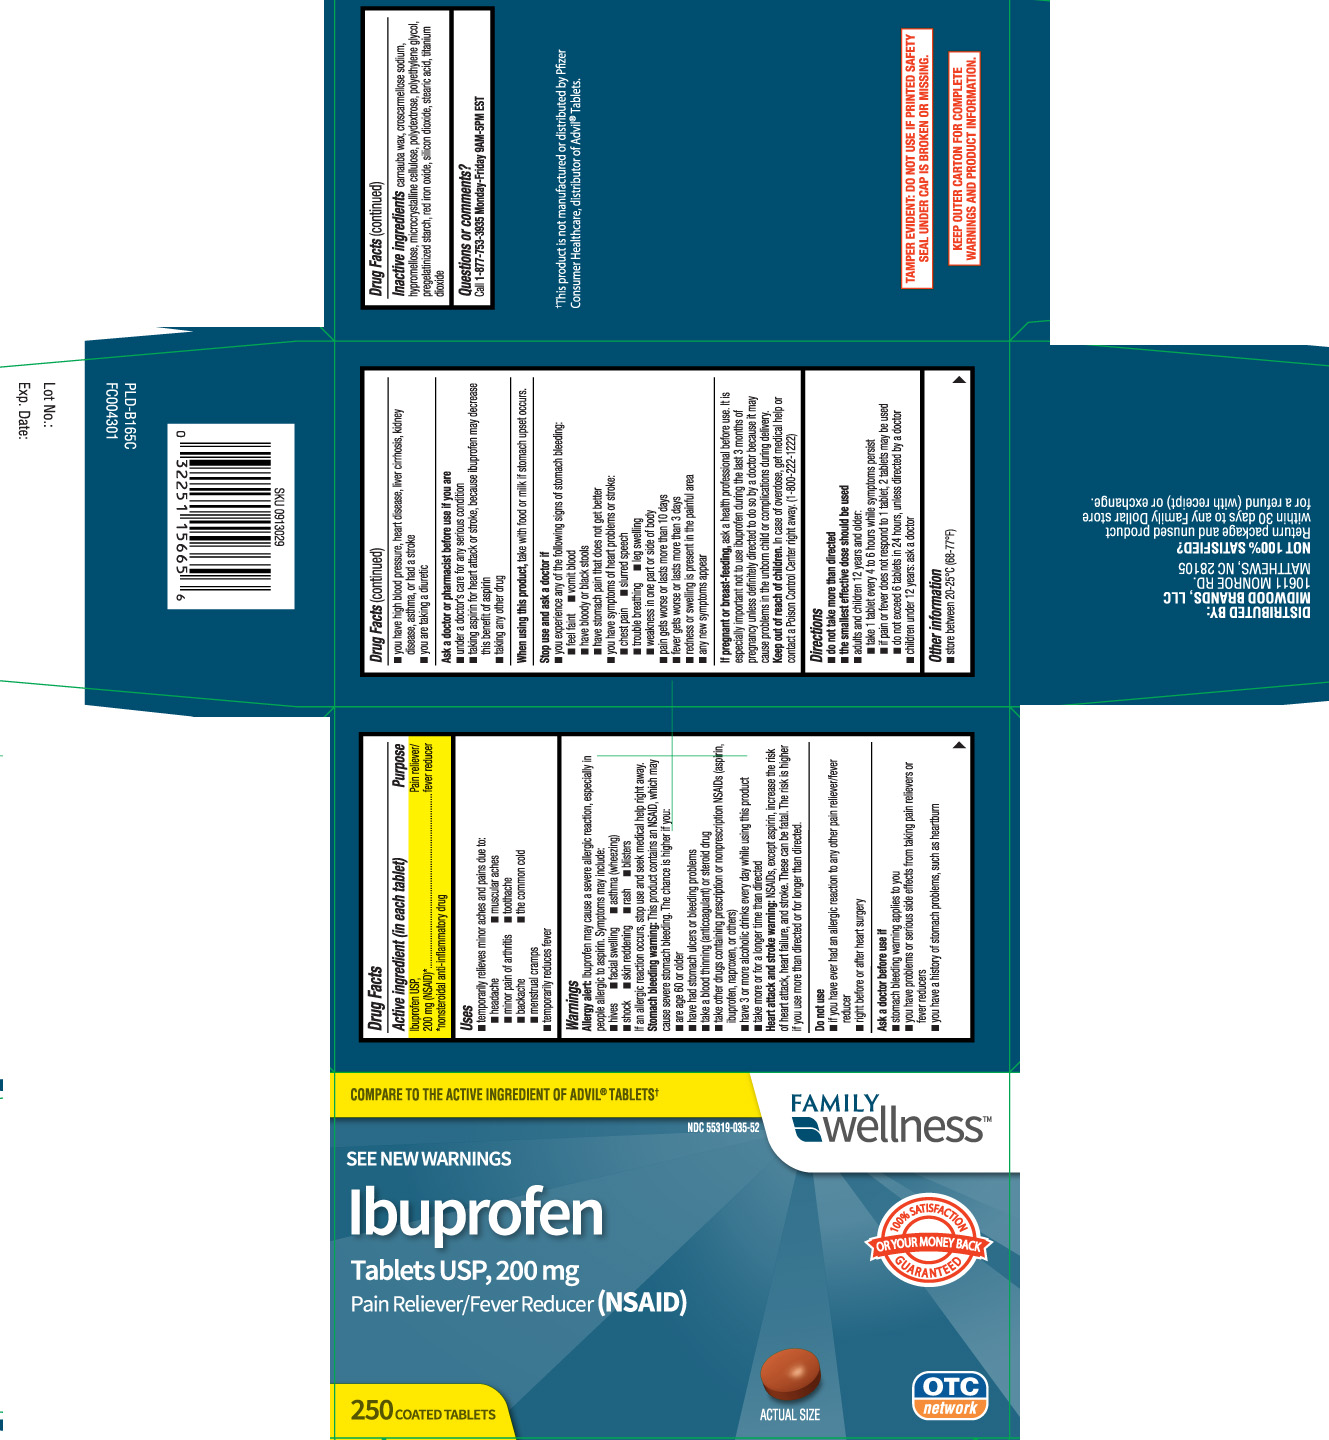 Ibuprofen USP 200 mg (NSAID)* *nonsteroidal anti-inflammatory drug